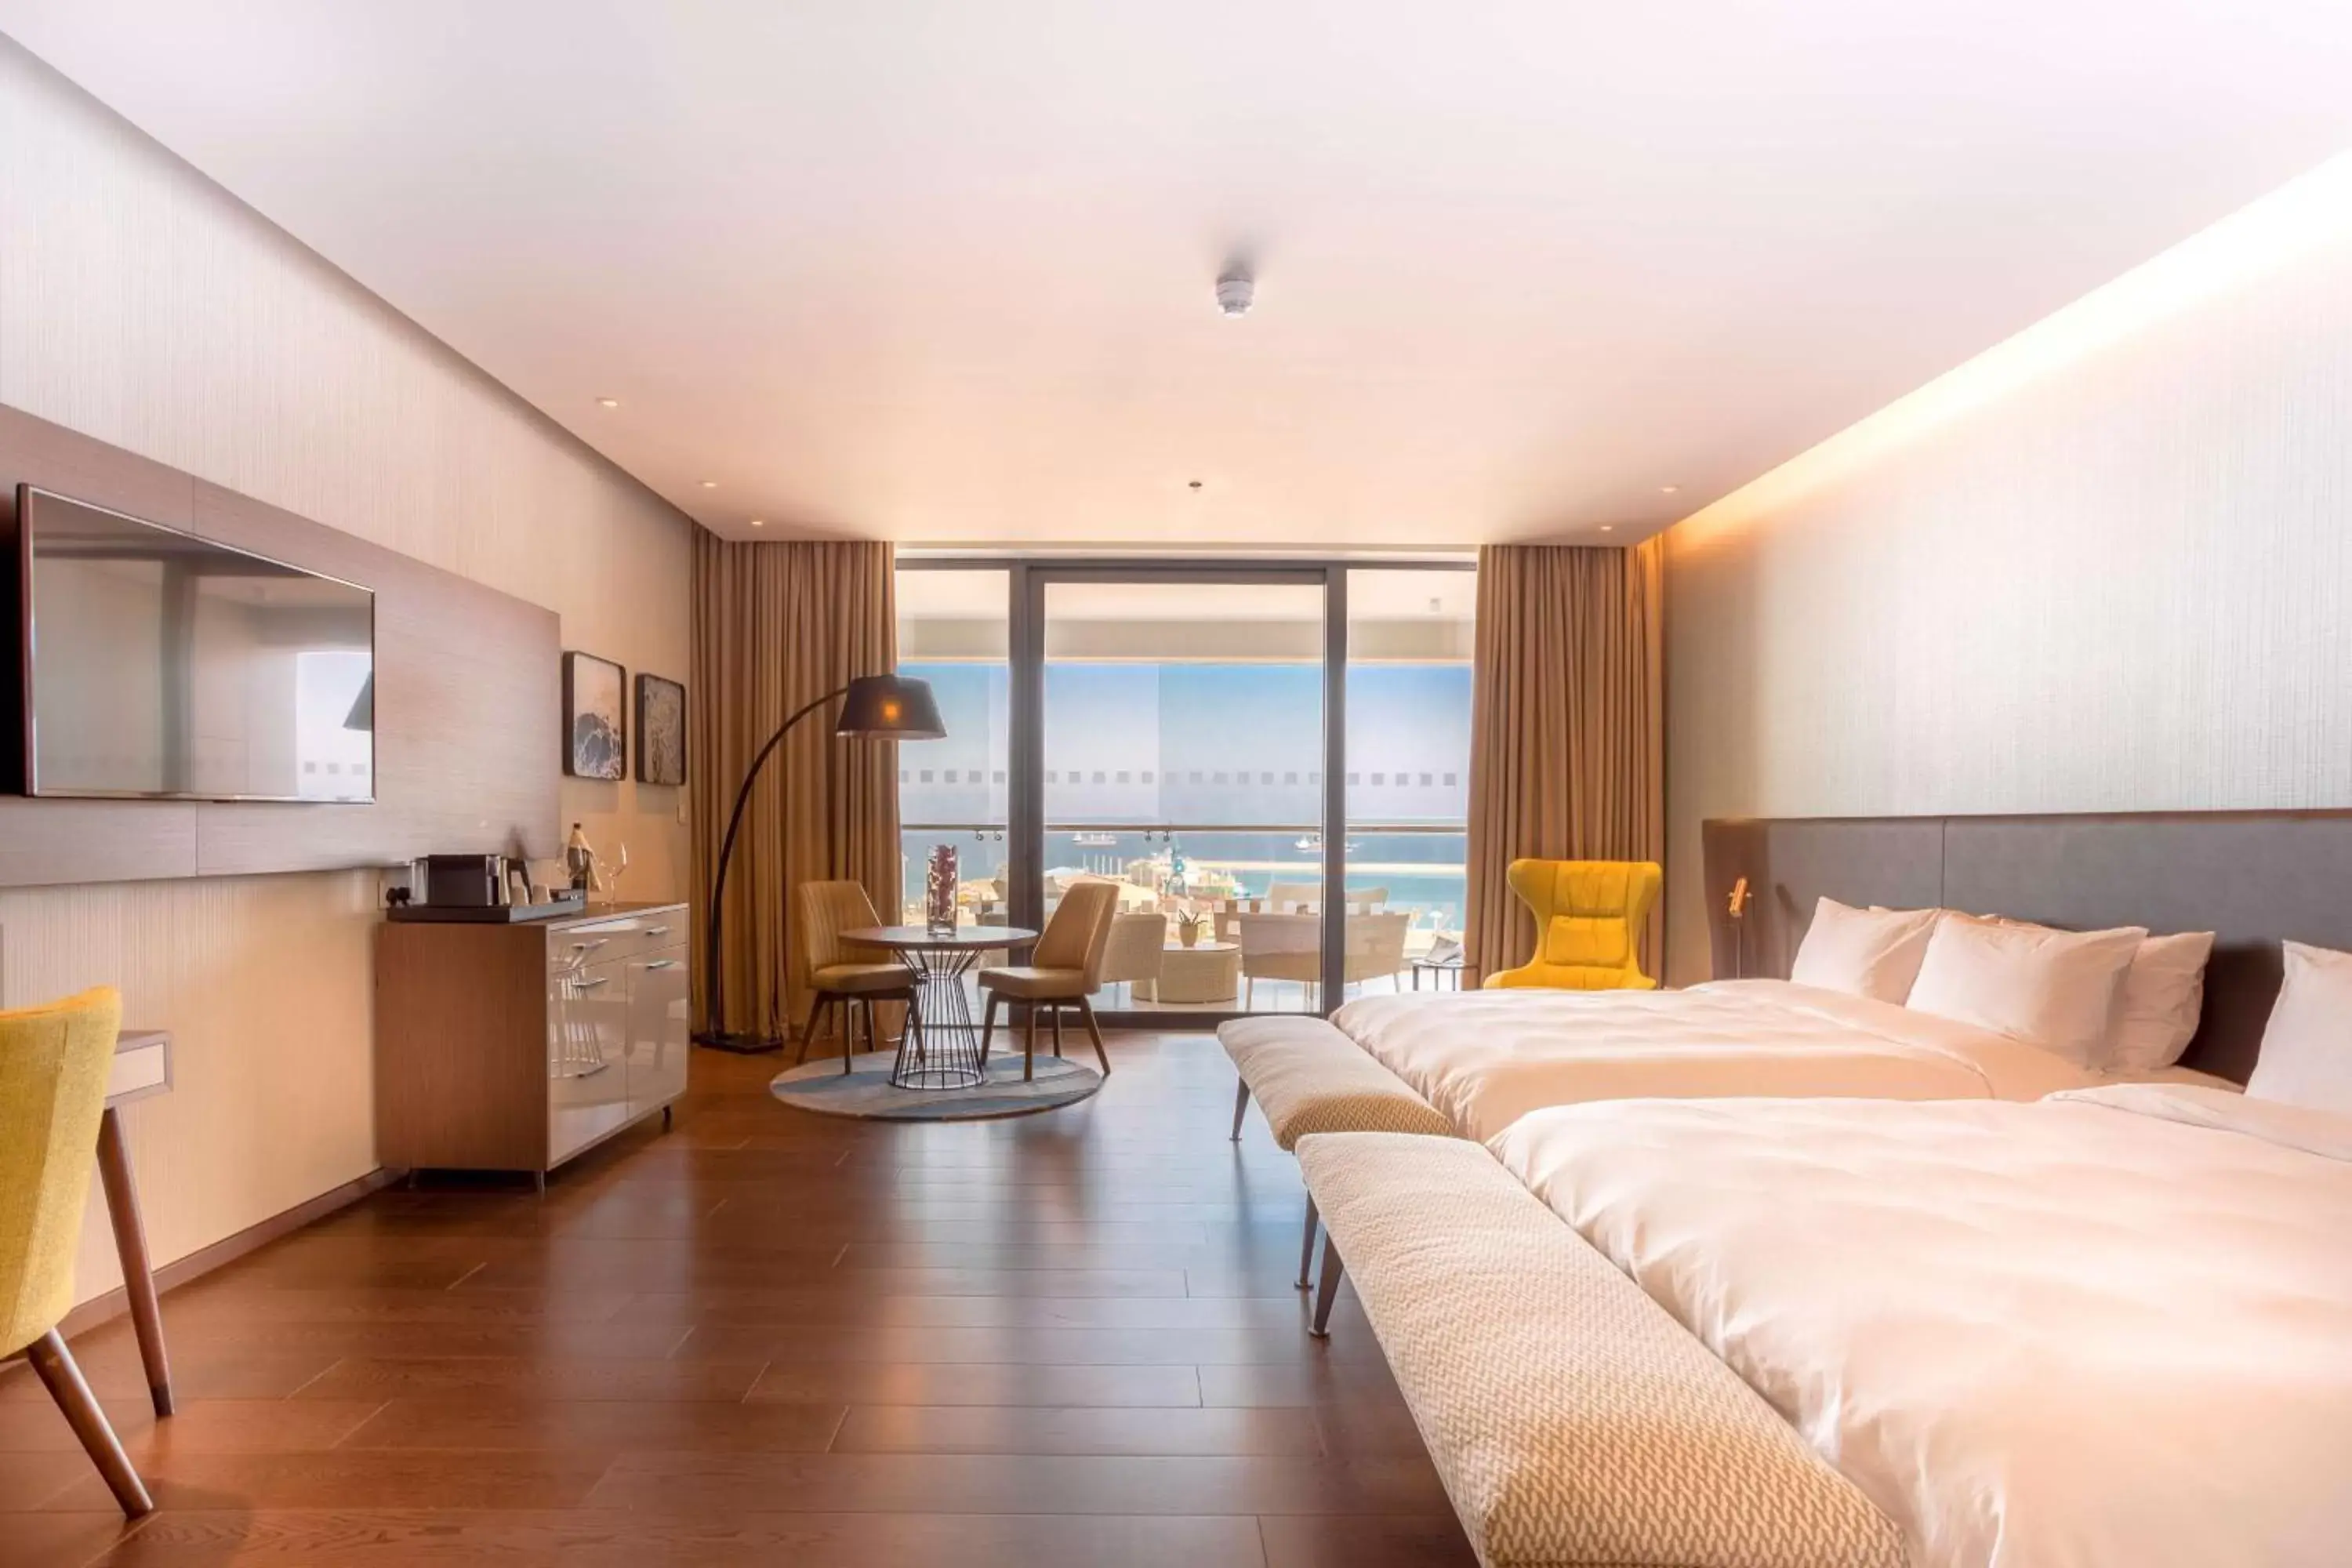 Photo of the whole room in Radisson Blu Hotel, Larnaca